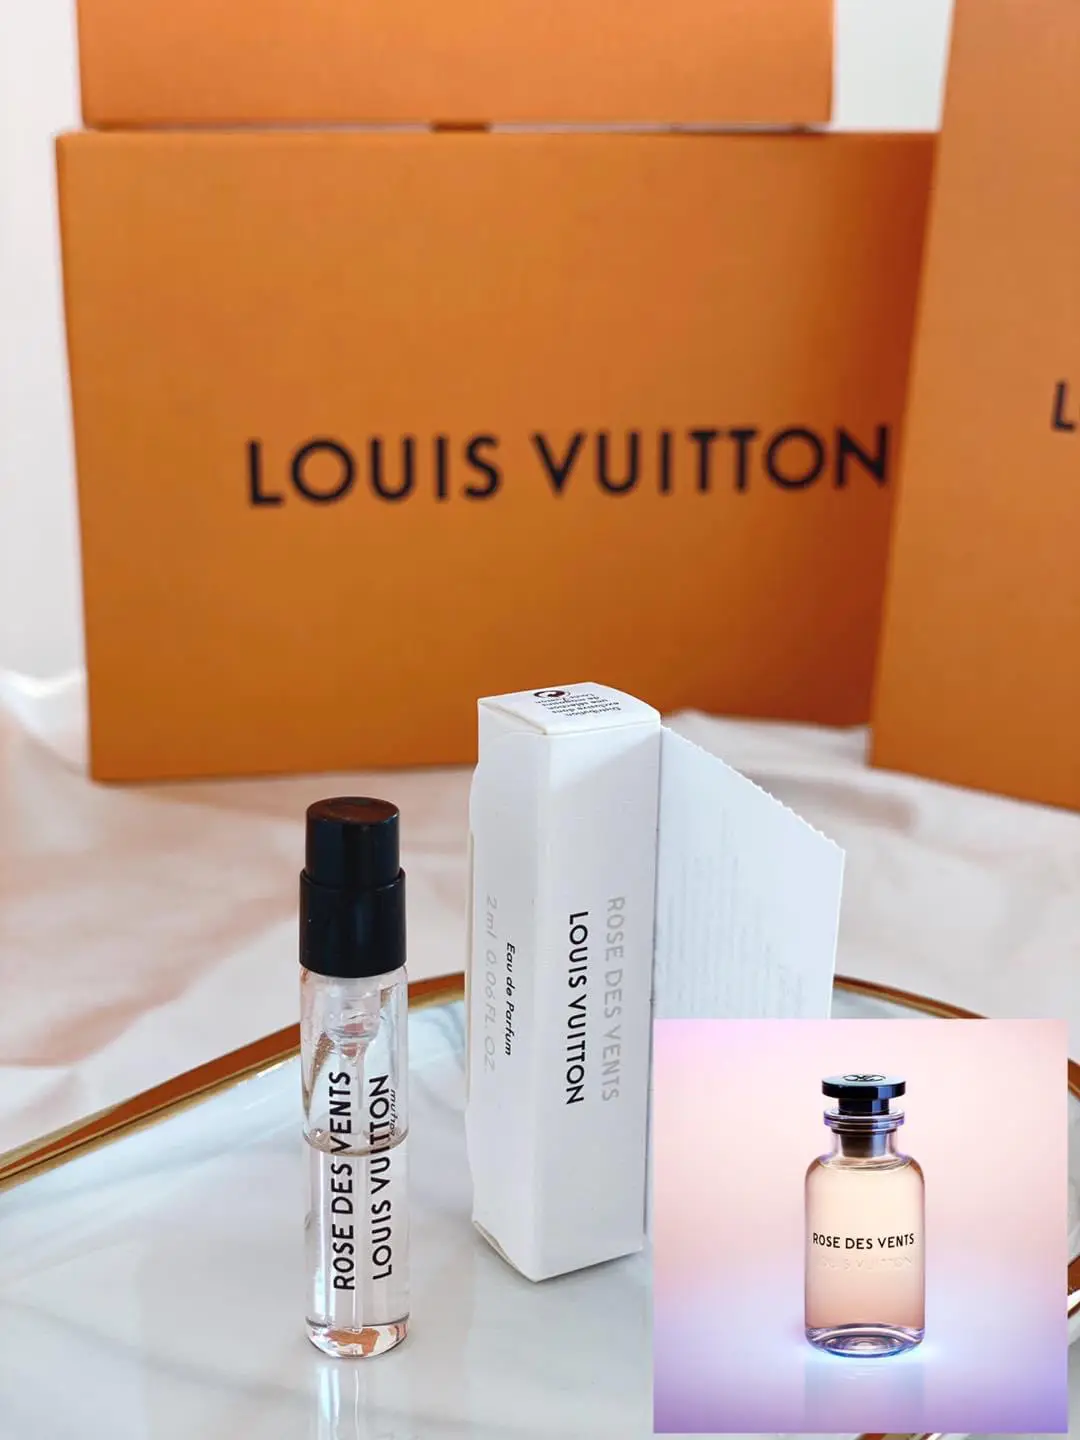 Louis Vuitton Perfume Samples 8*2ml